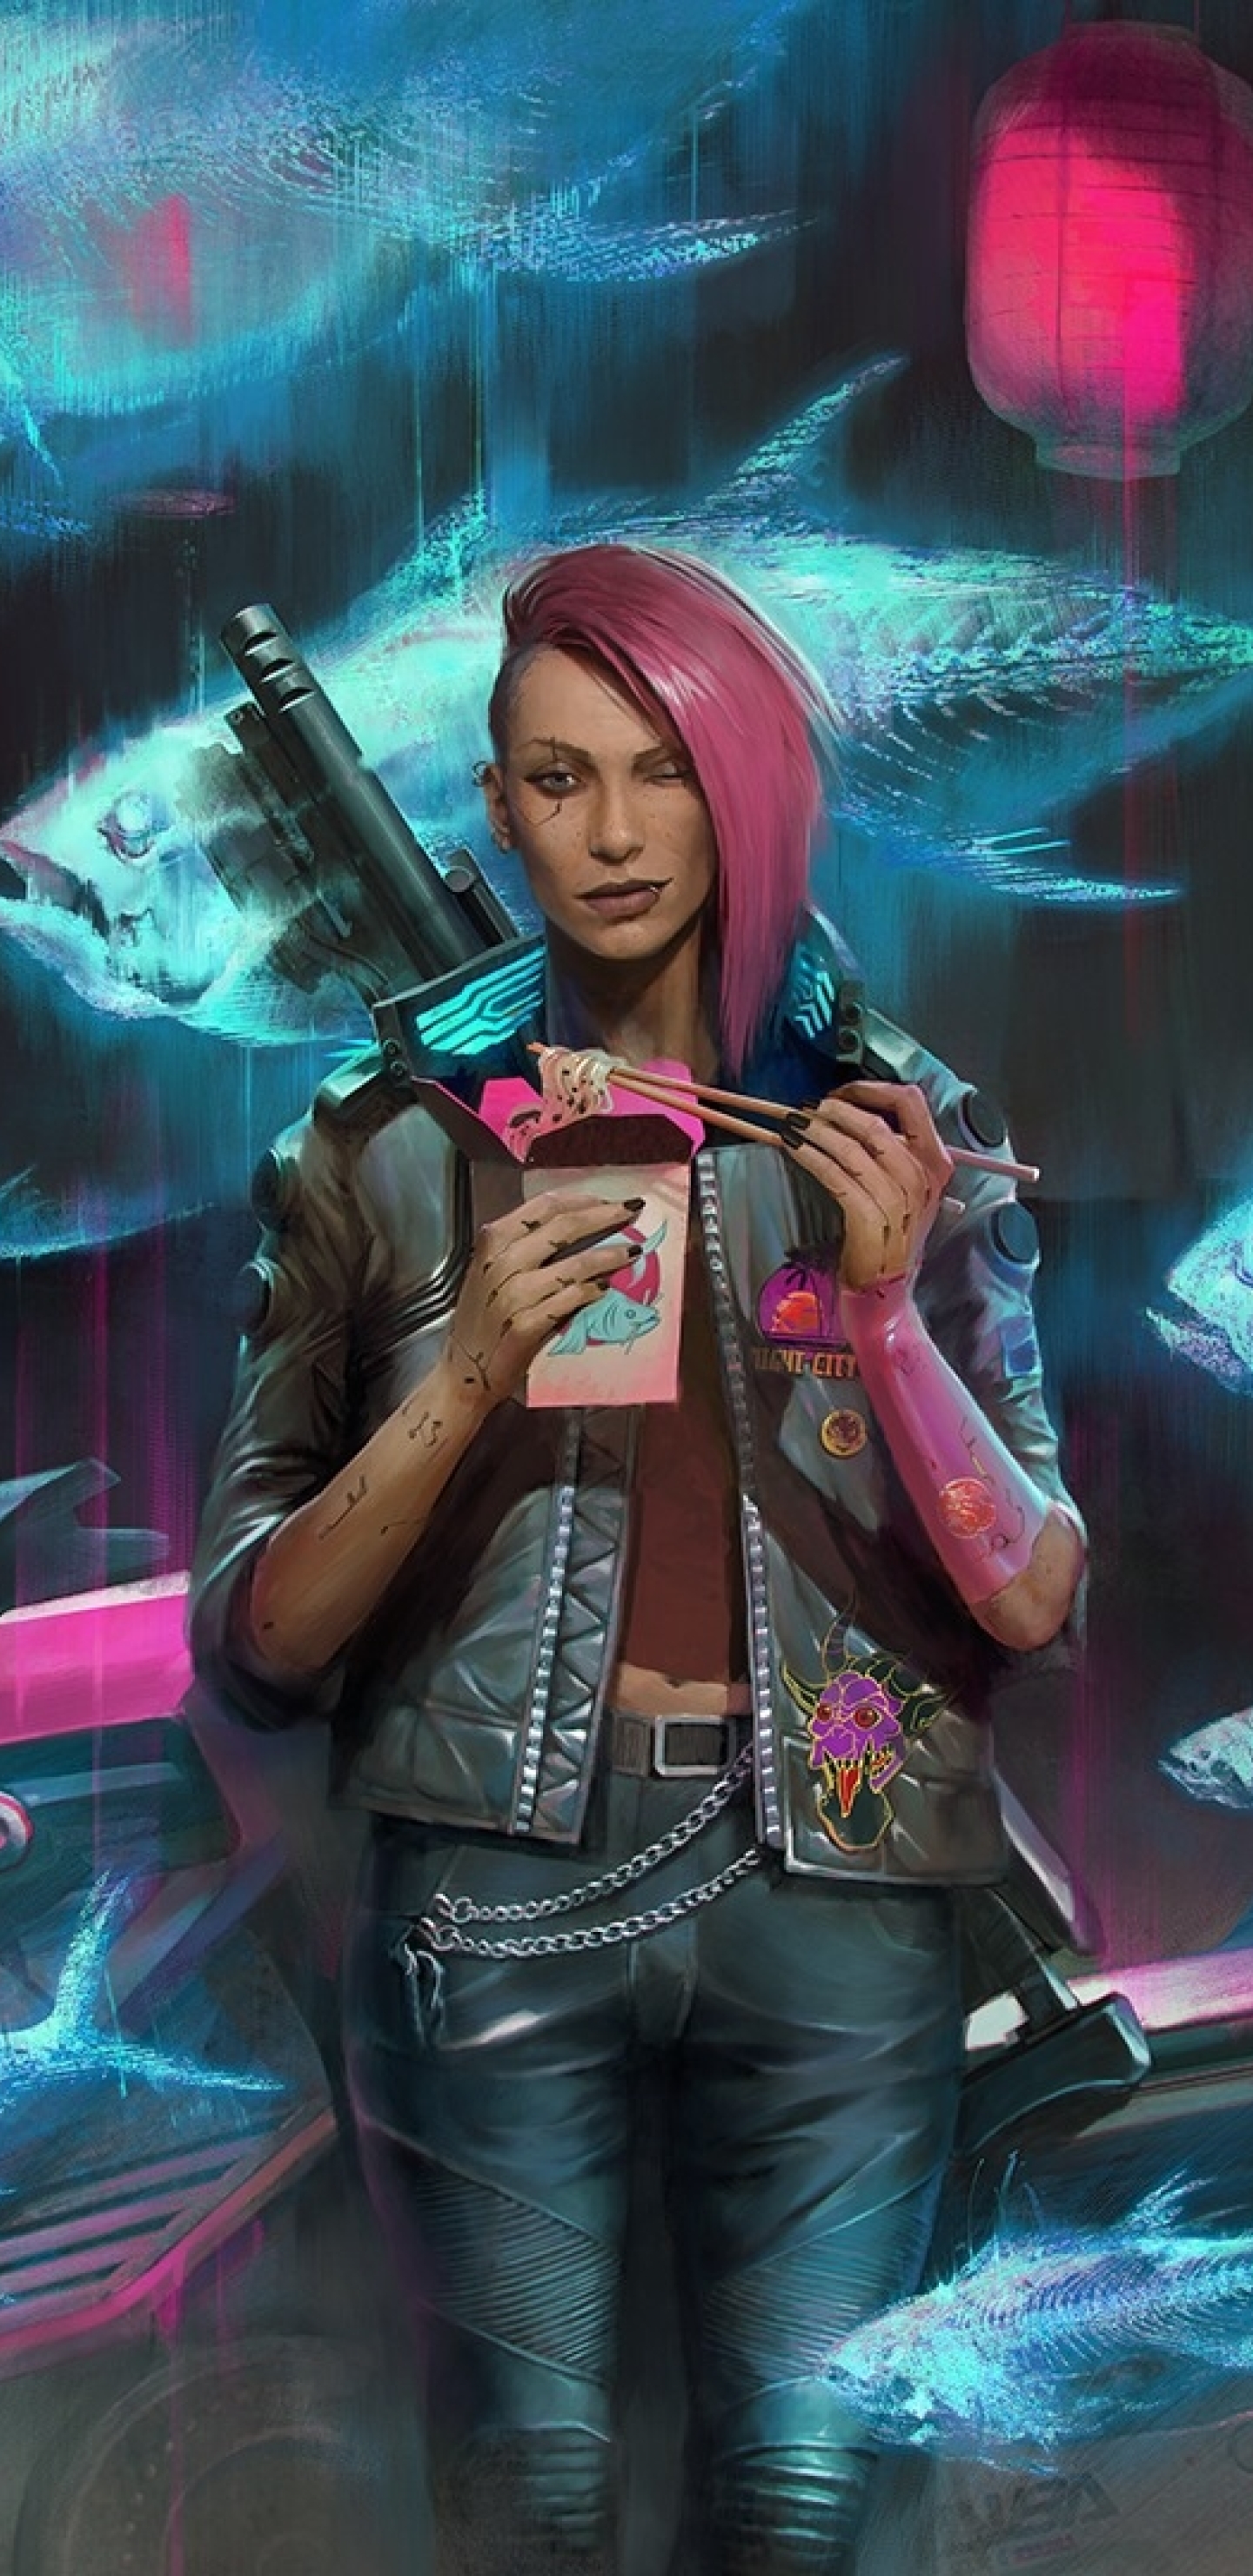 Cyberpunk Girl wallpaper by Khaled_Noor - Download on ZEDGE™